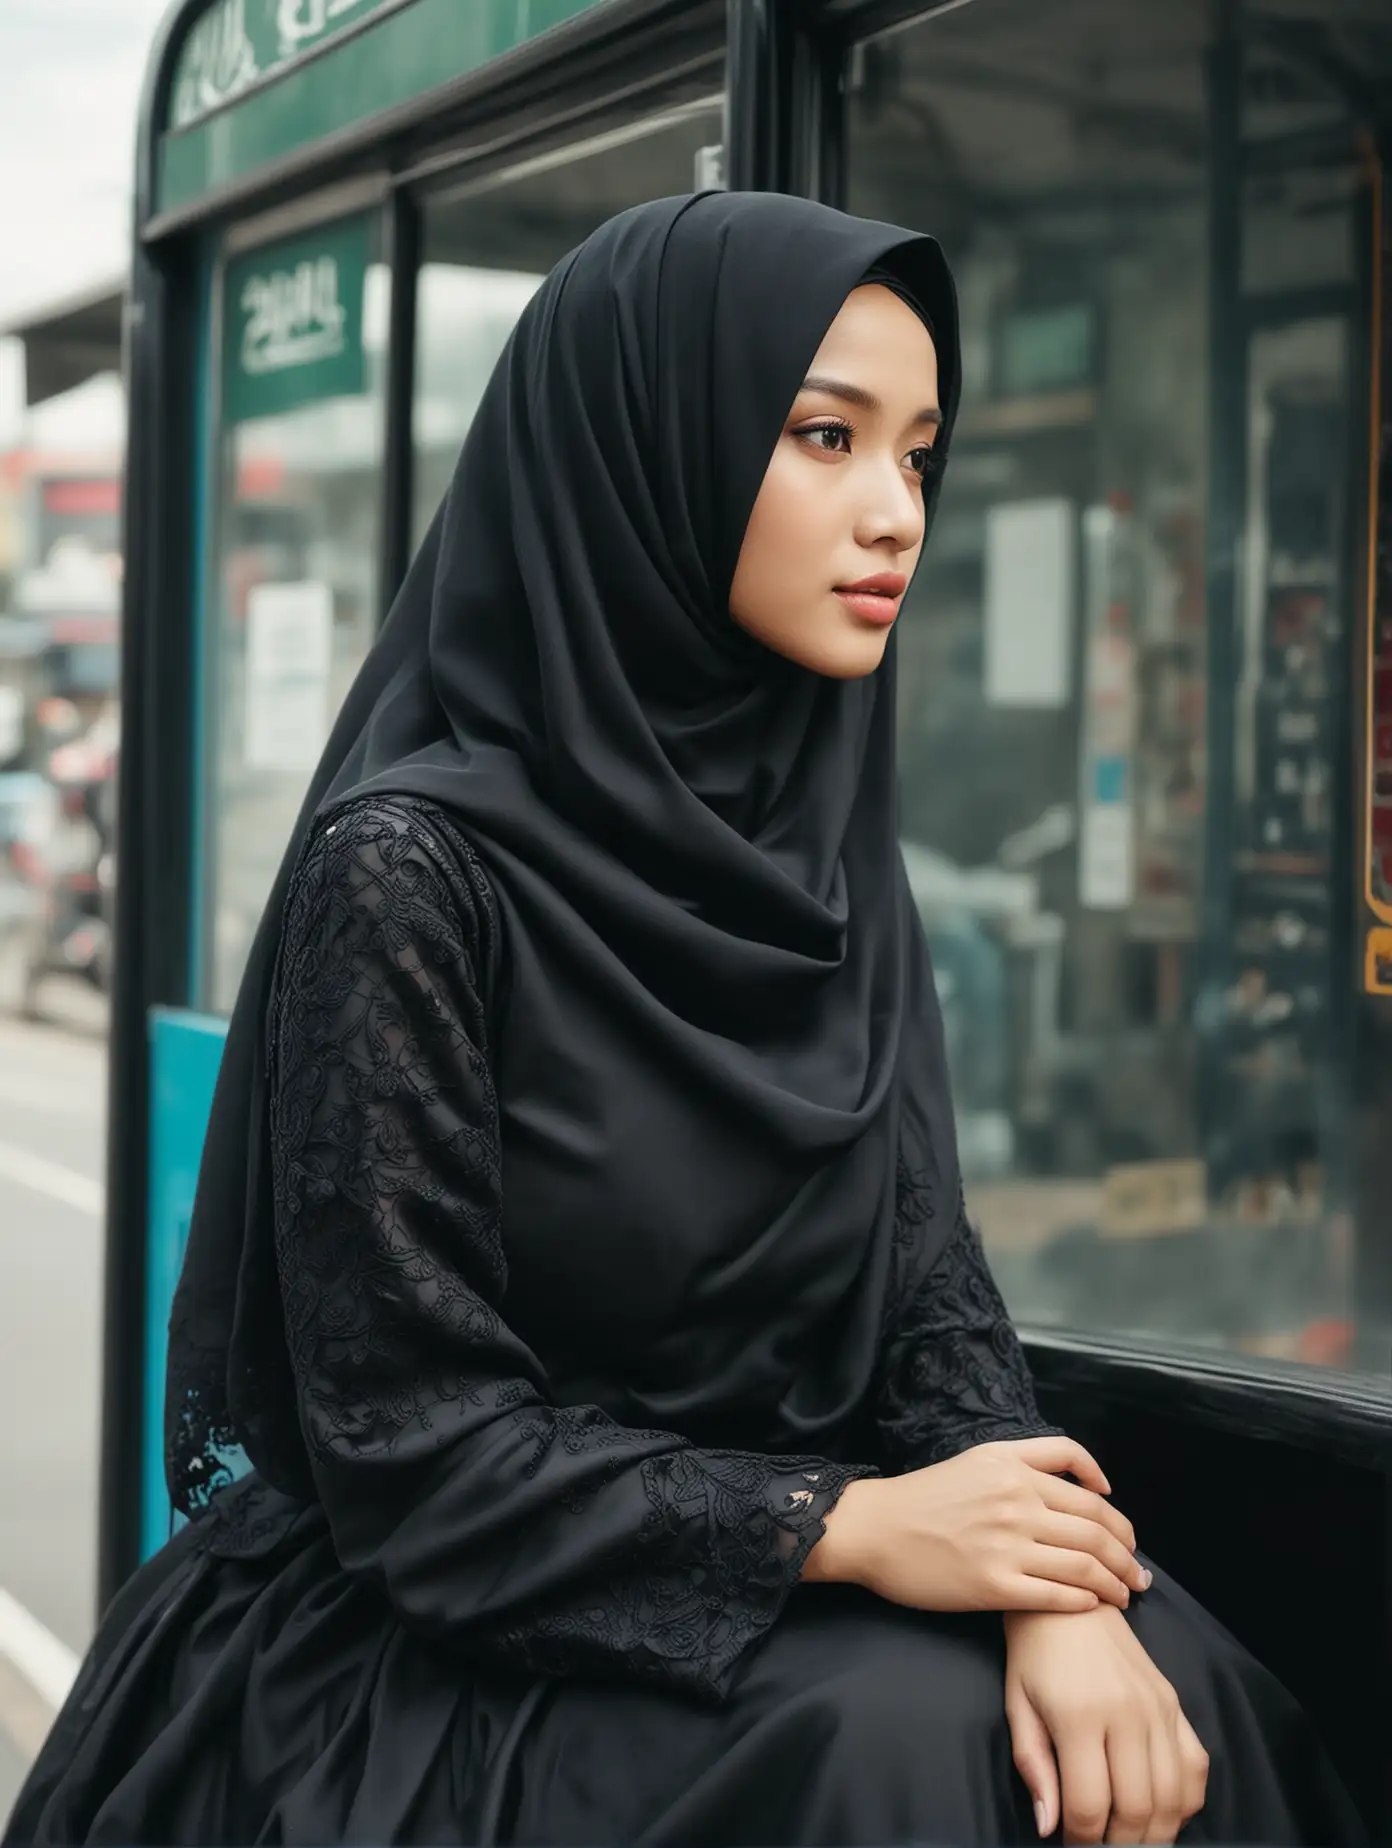 Elegant Indonesian Women in Black Wedding Hijabs at Korean Bus Stop